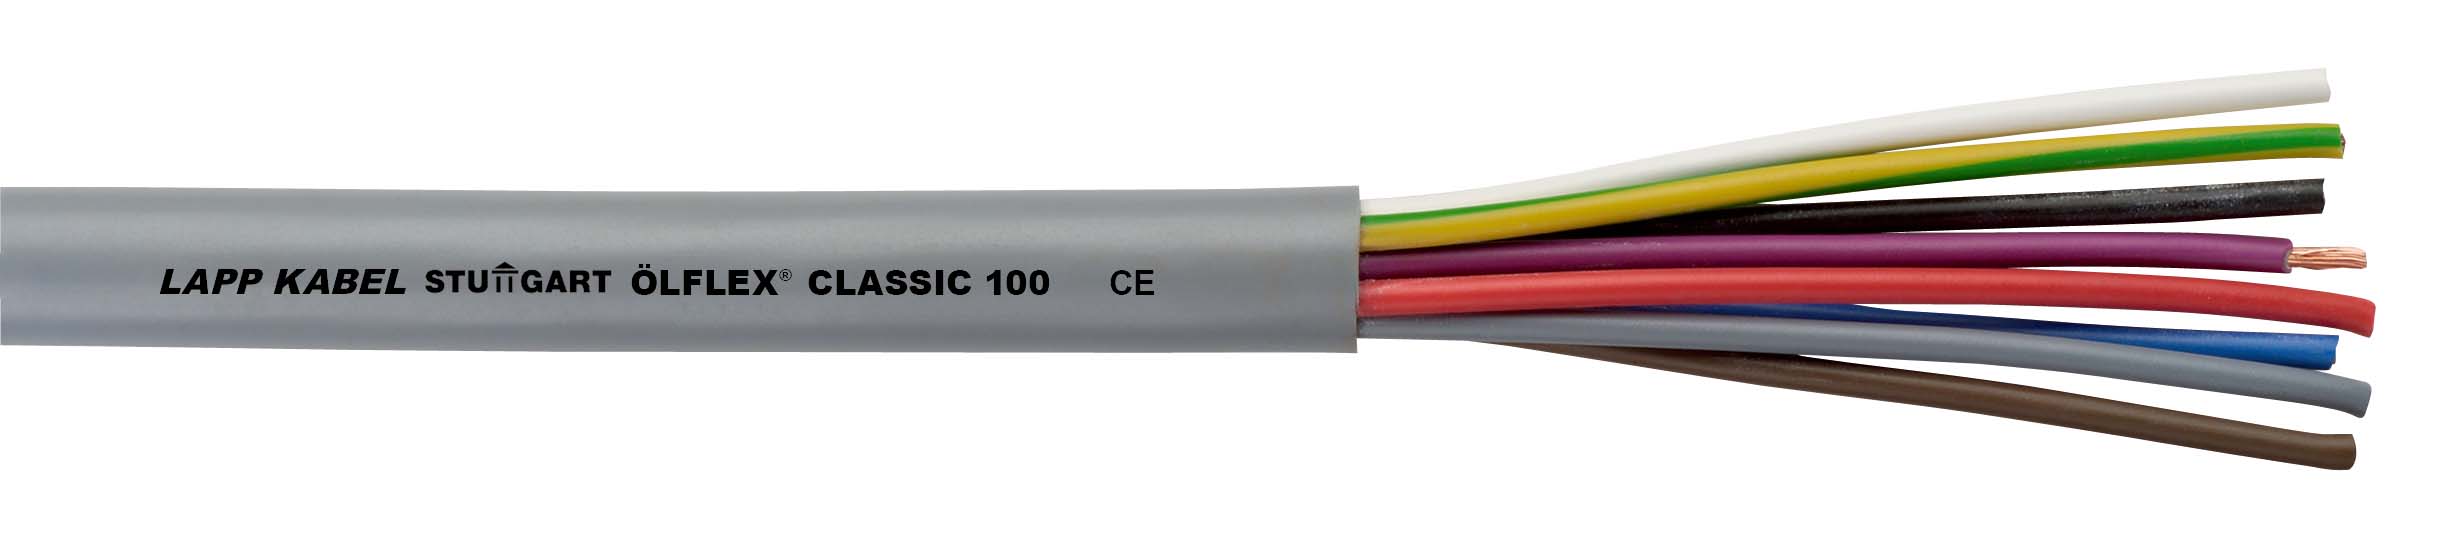 Lapp Kabel&Leitung ÖLFLEX CLASSIC 100 5G2,5 00100893 R100 - 00100893/100